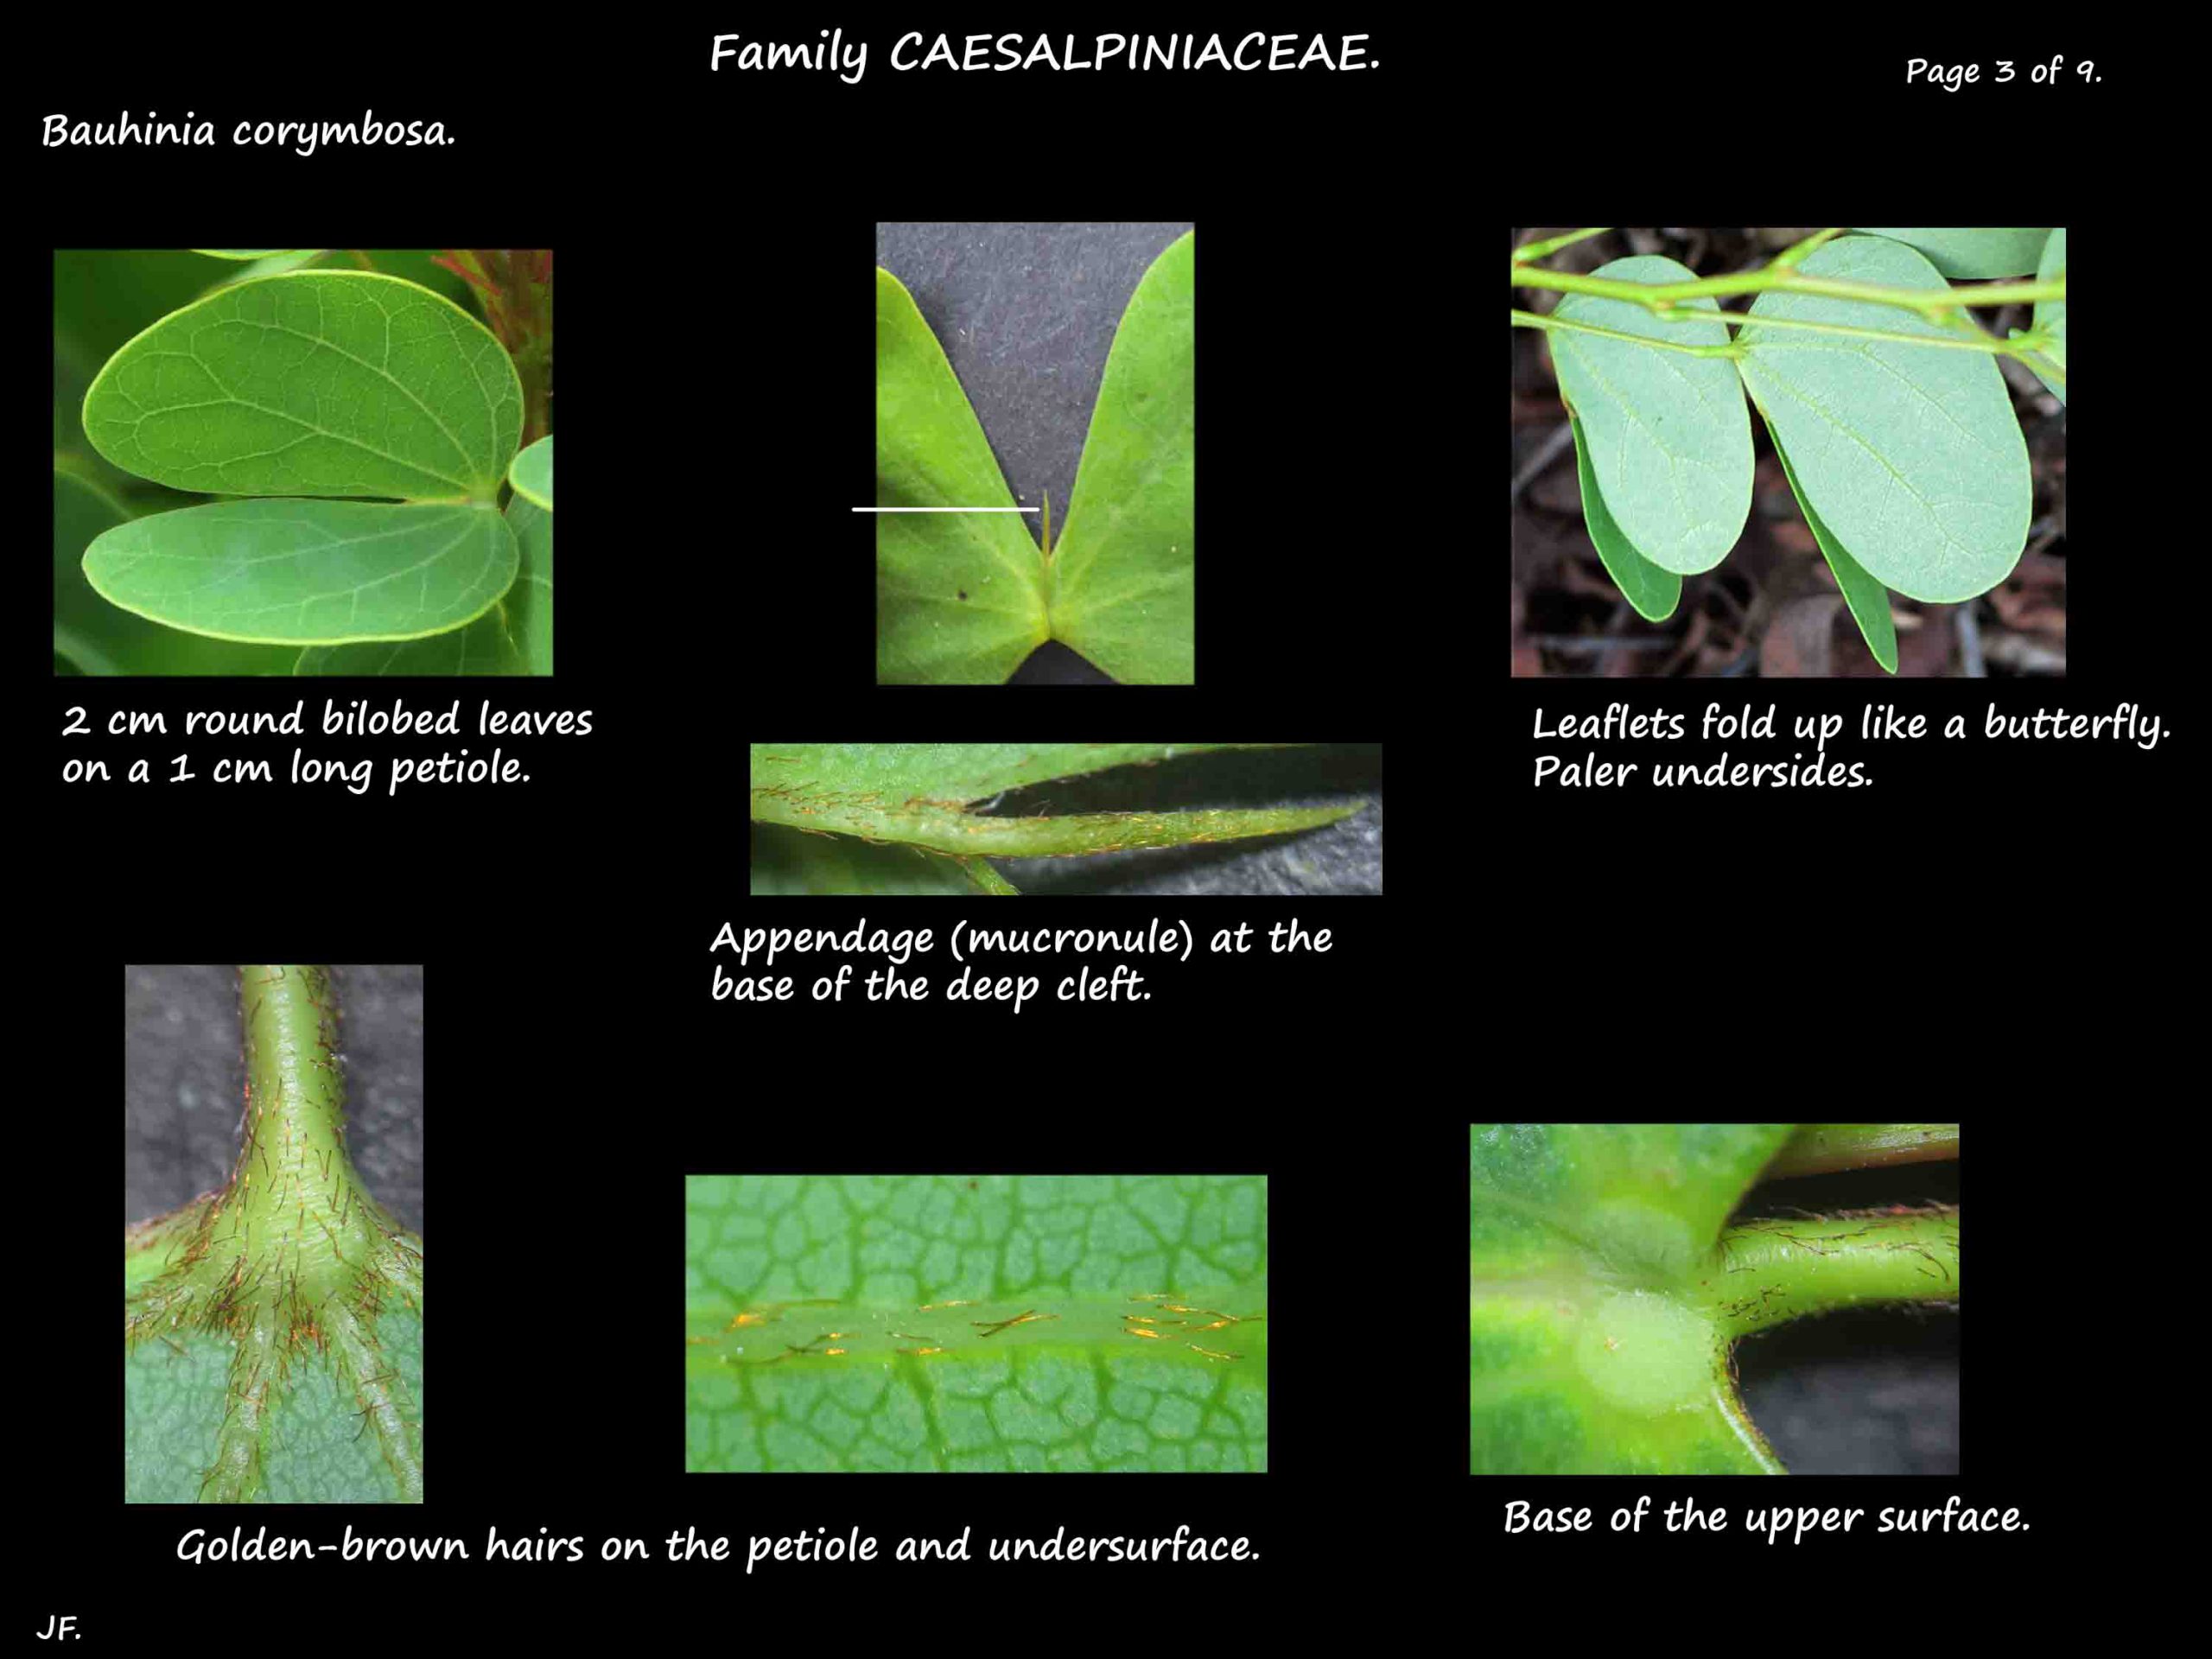 3 Bauhinia corymbosa leaves